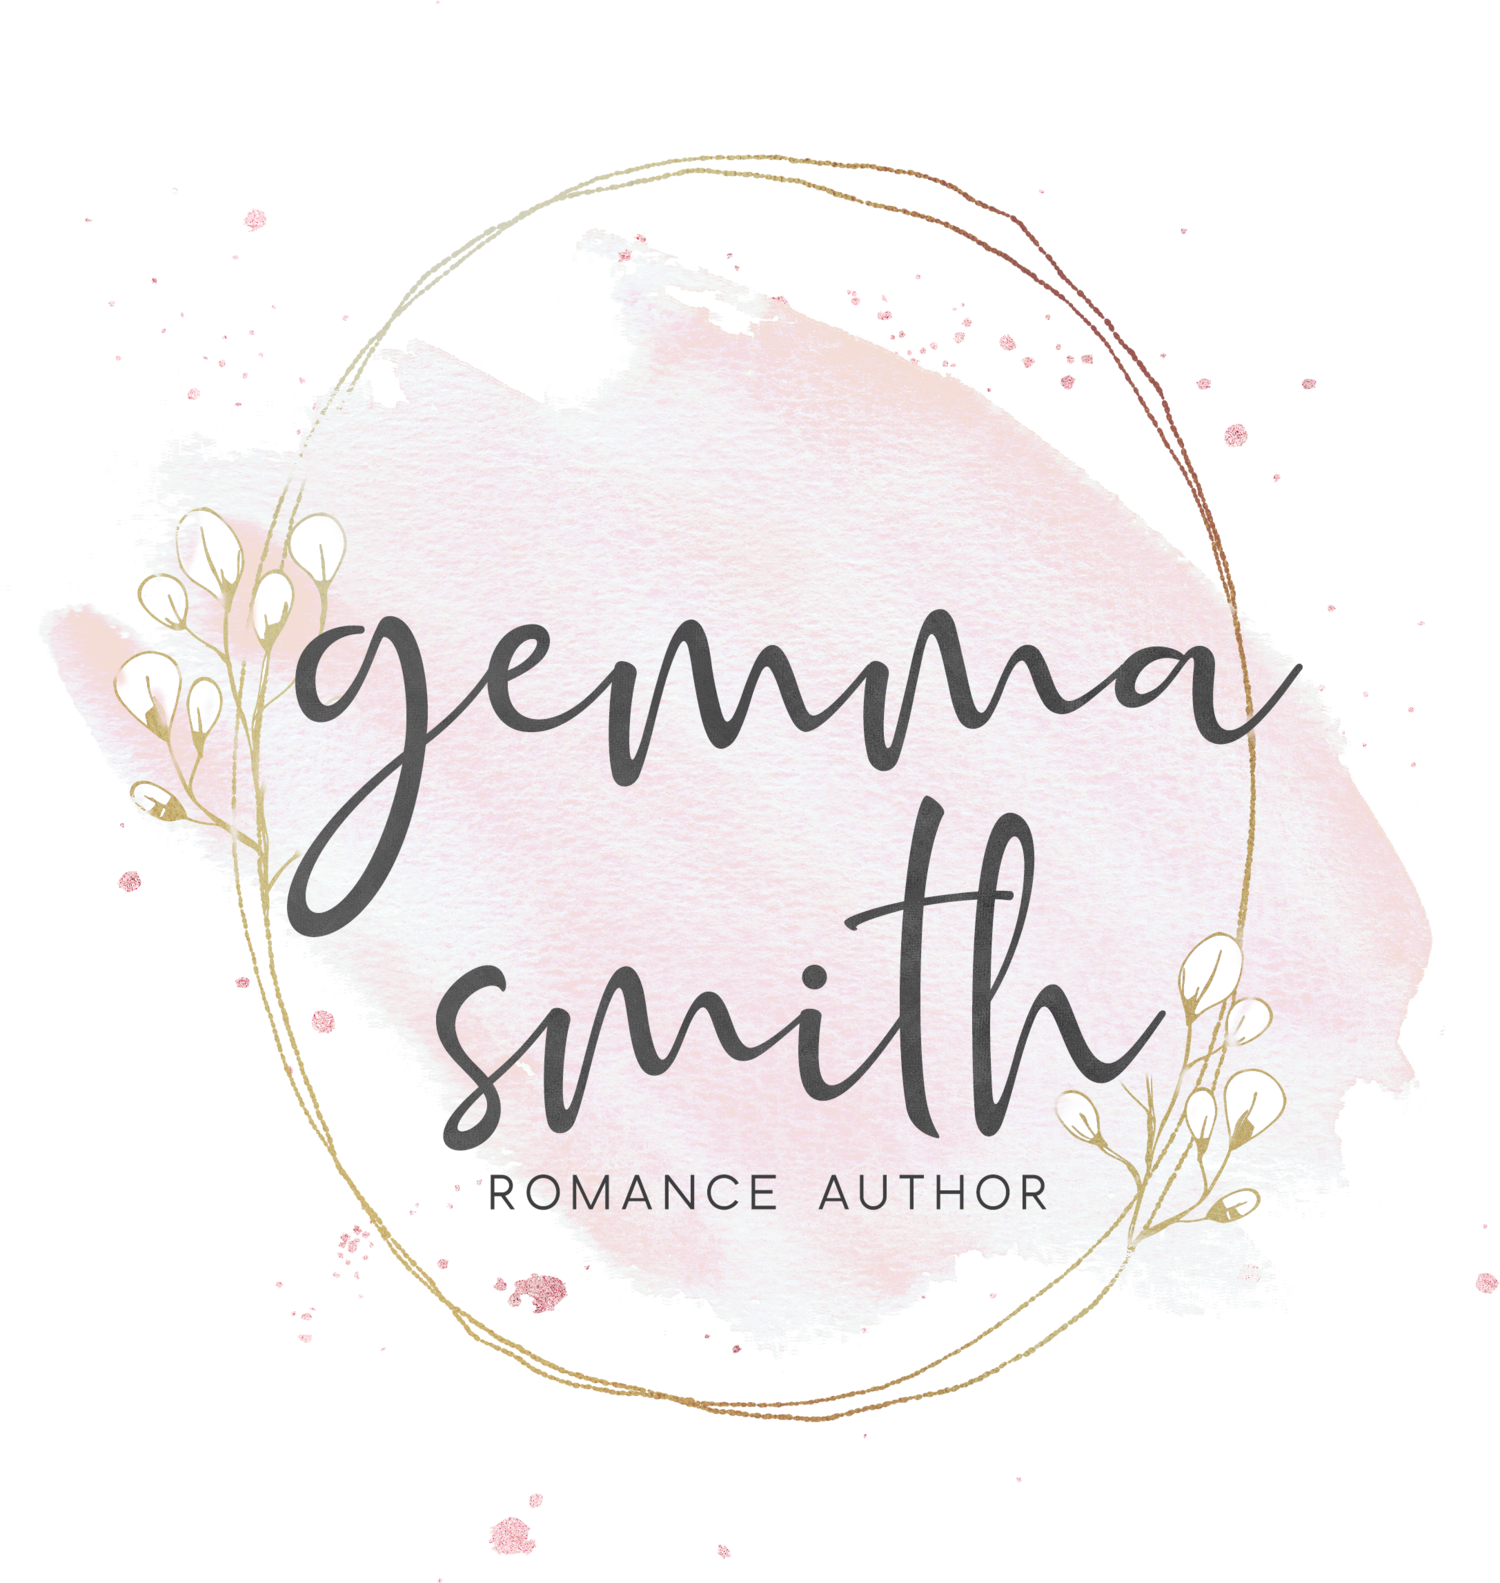 Gemma Smith, Romance Writer